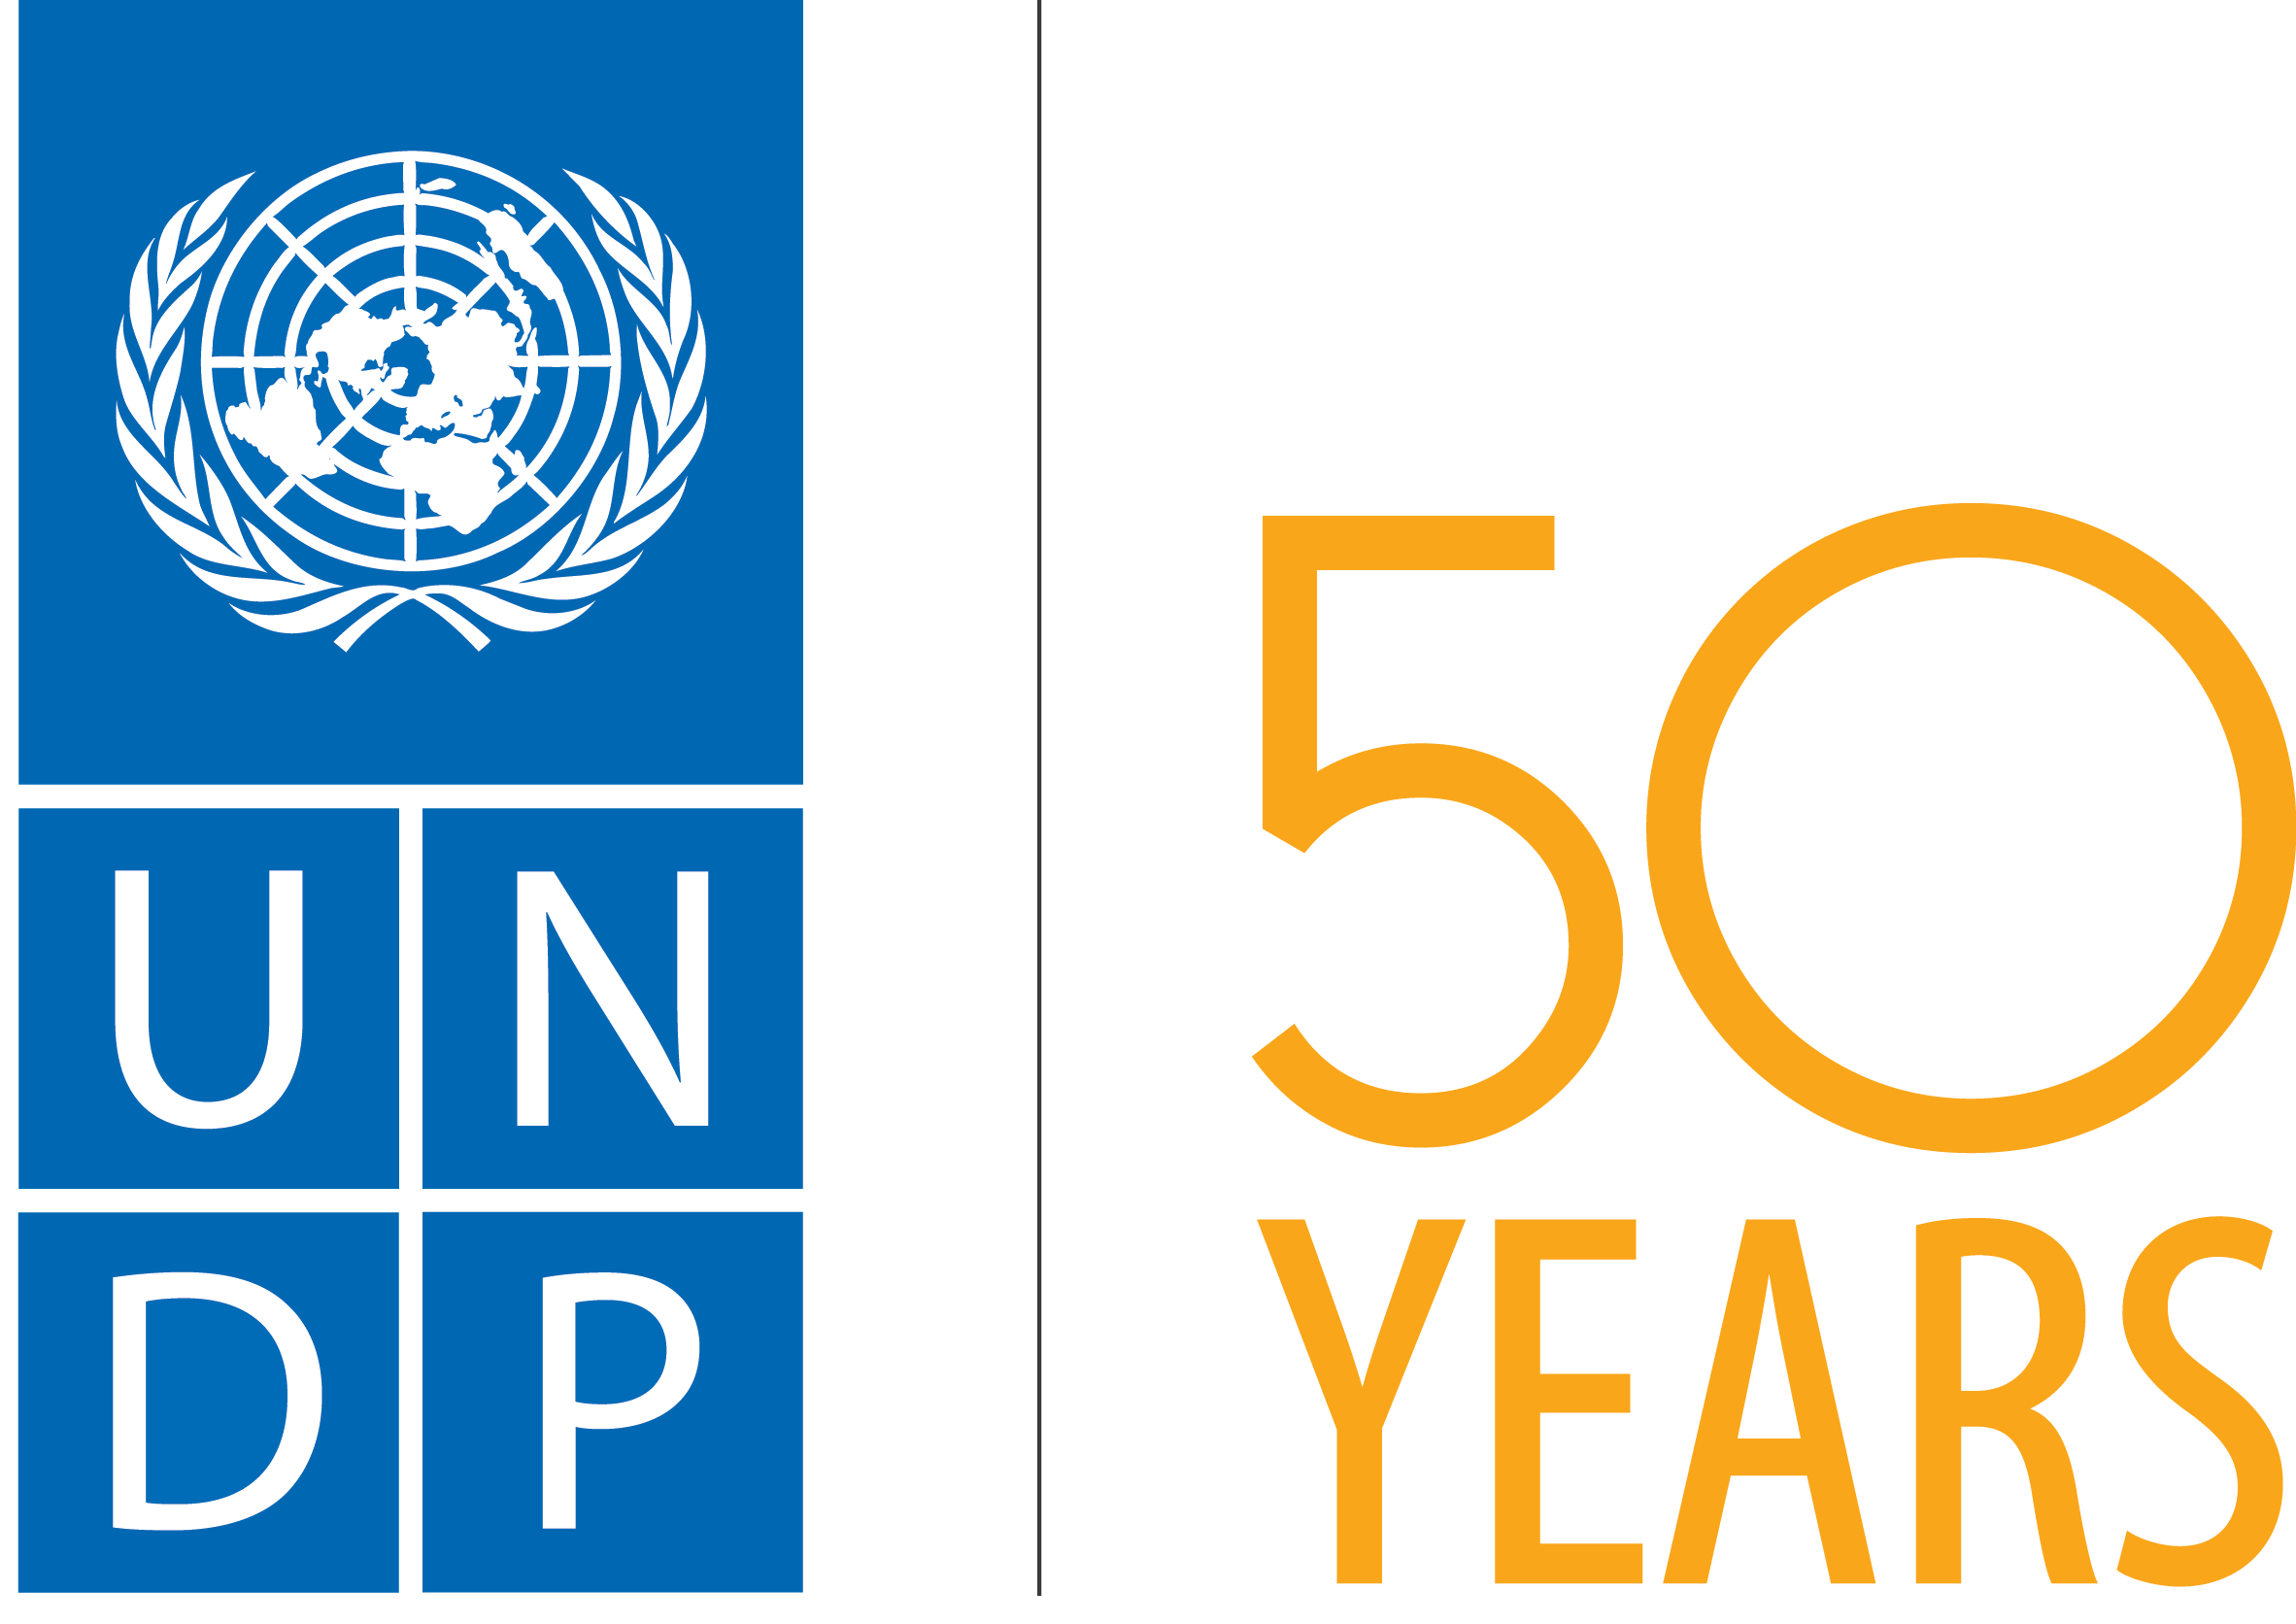 UNDP Logo - UNDP at 50: An investment in UN's key role in development – UN.DK